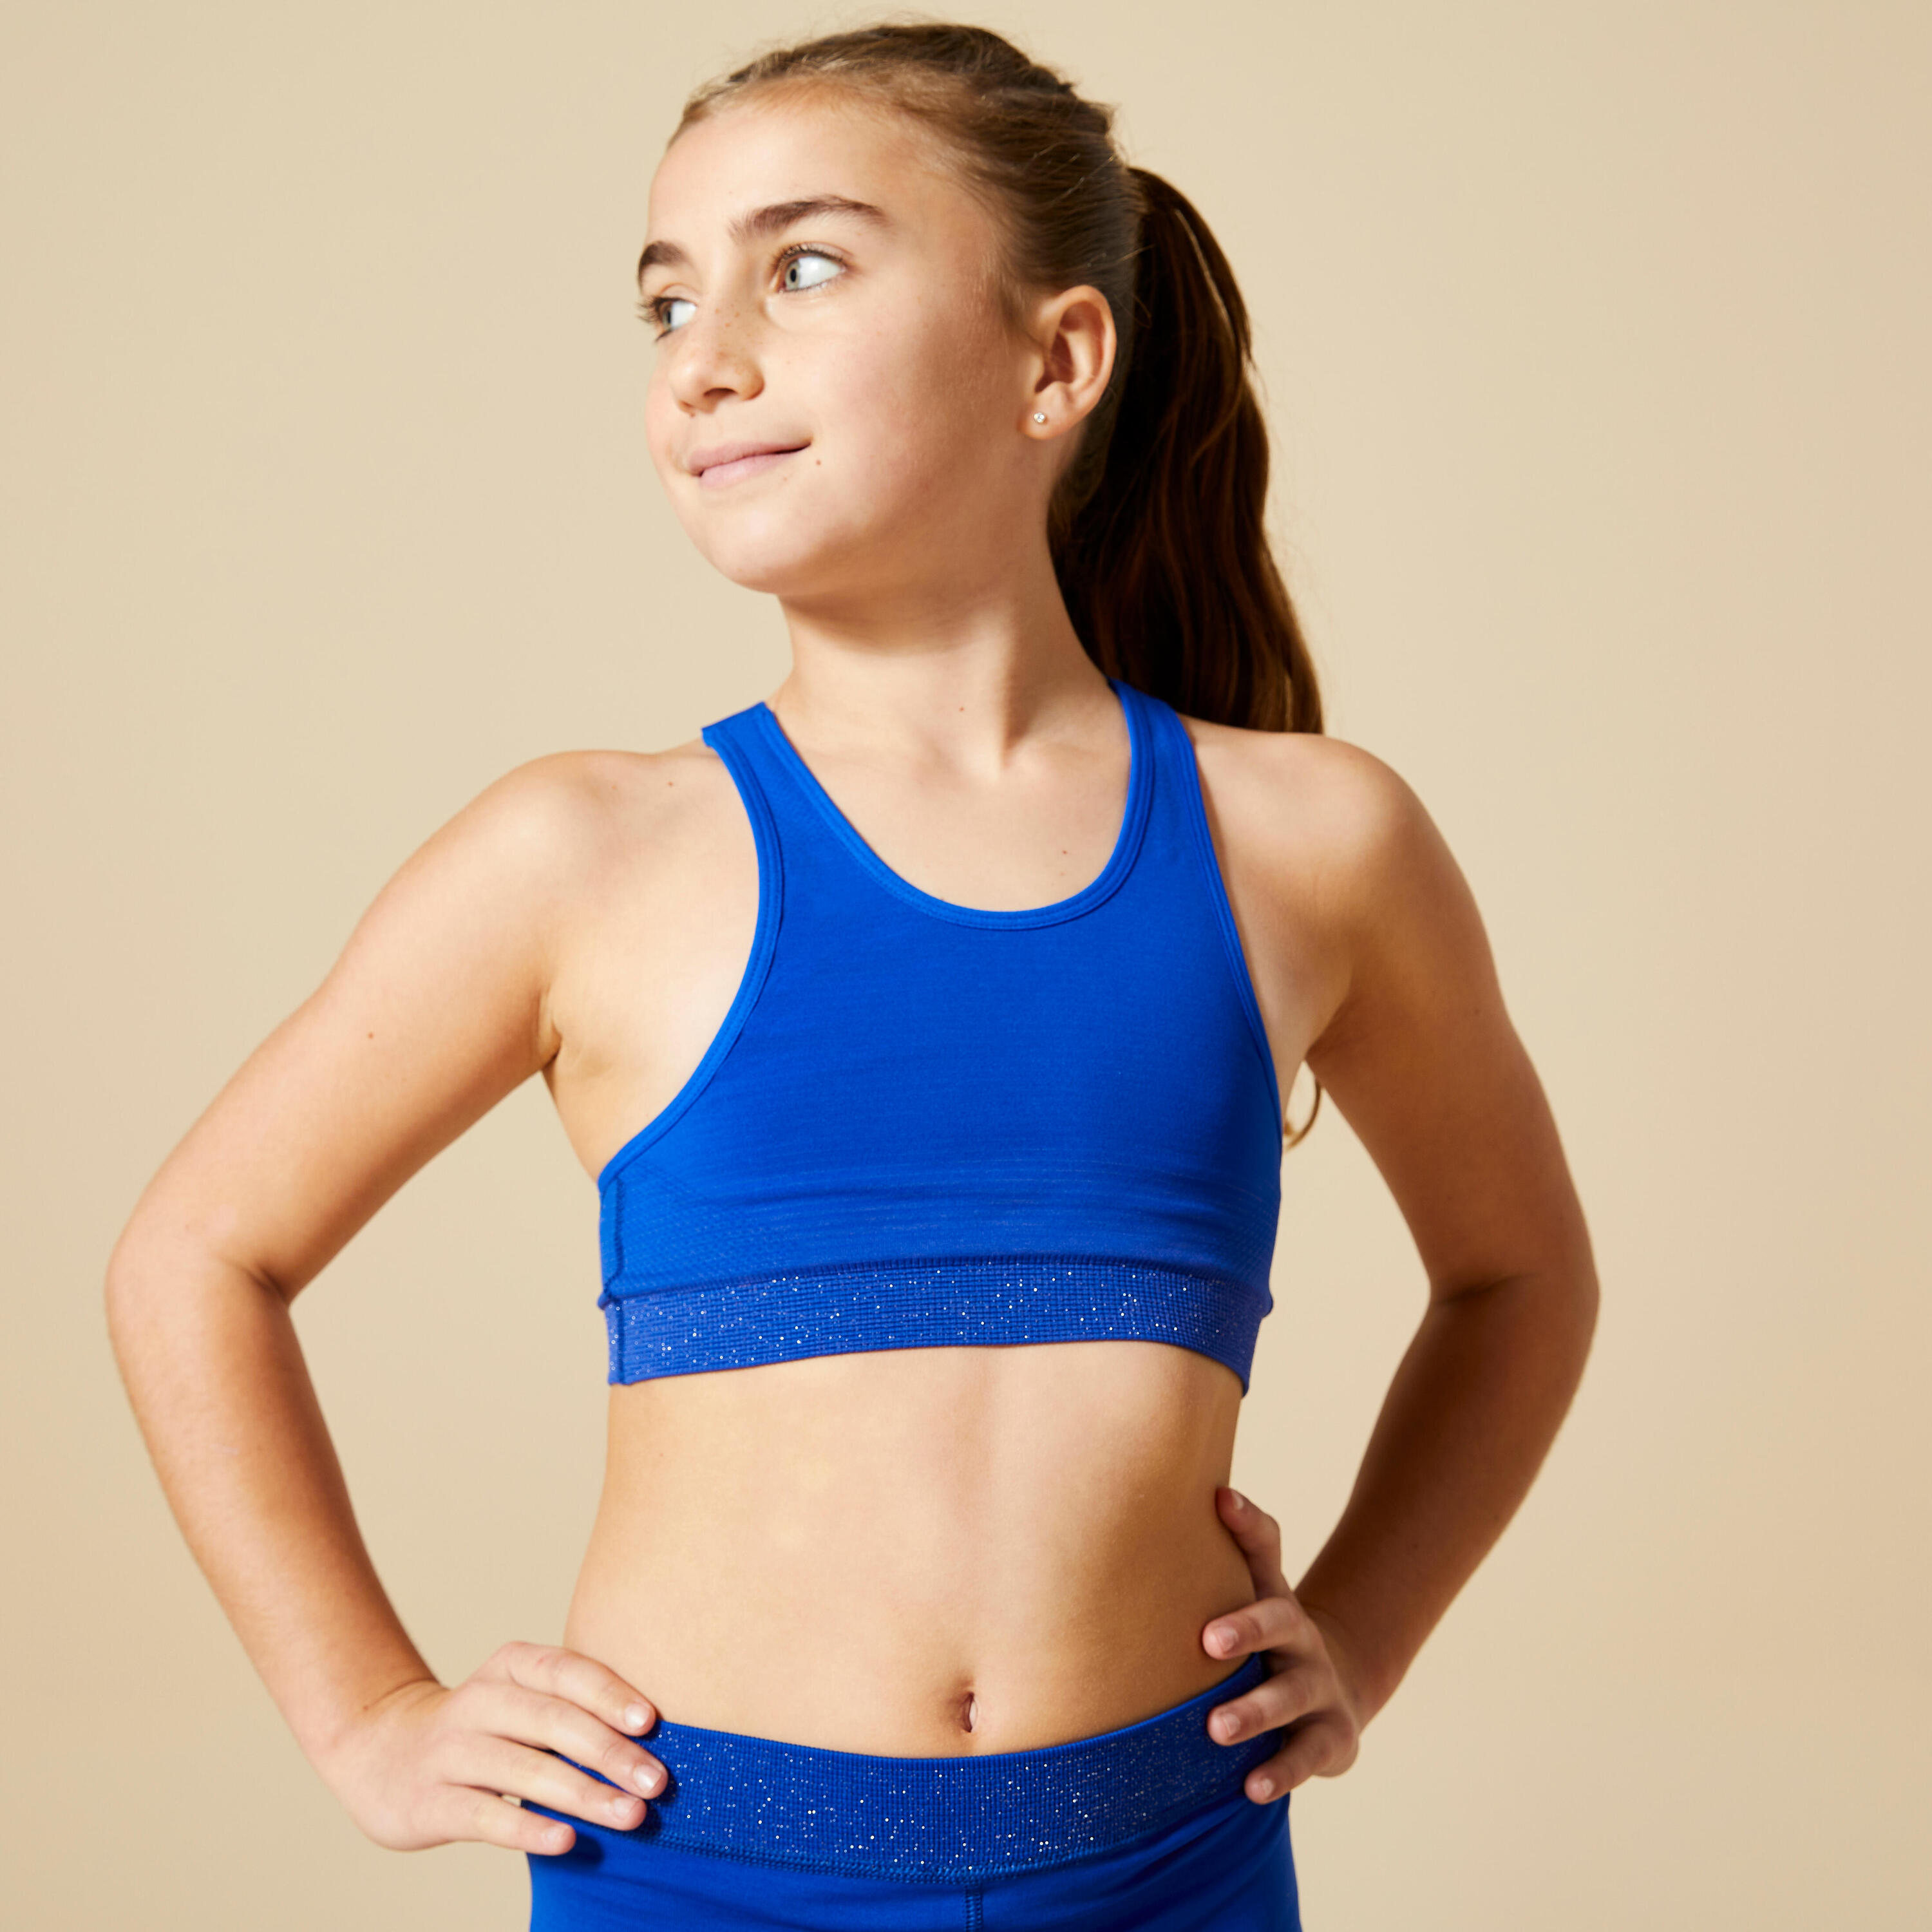 Kids Girls Print Crop Tops Bra Sports Tops Fitness Workout & Gymnastics